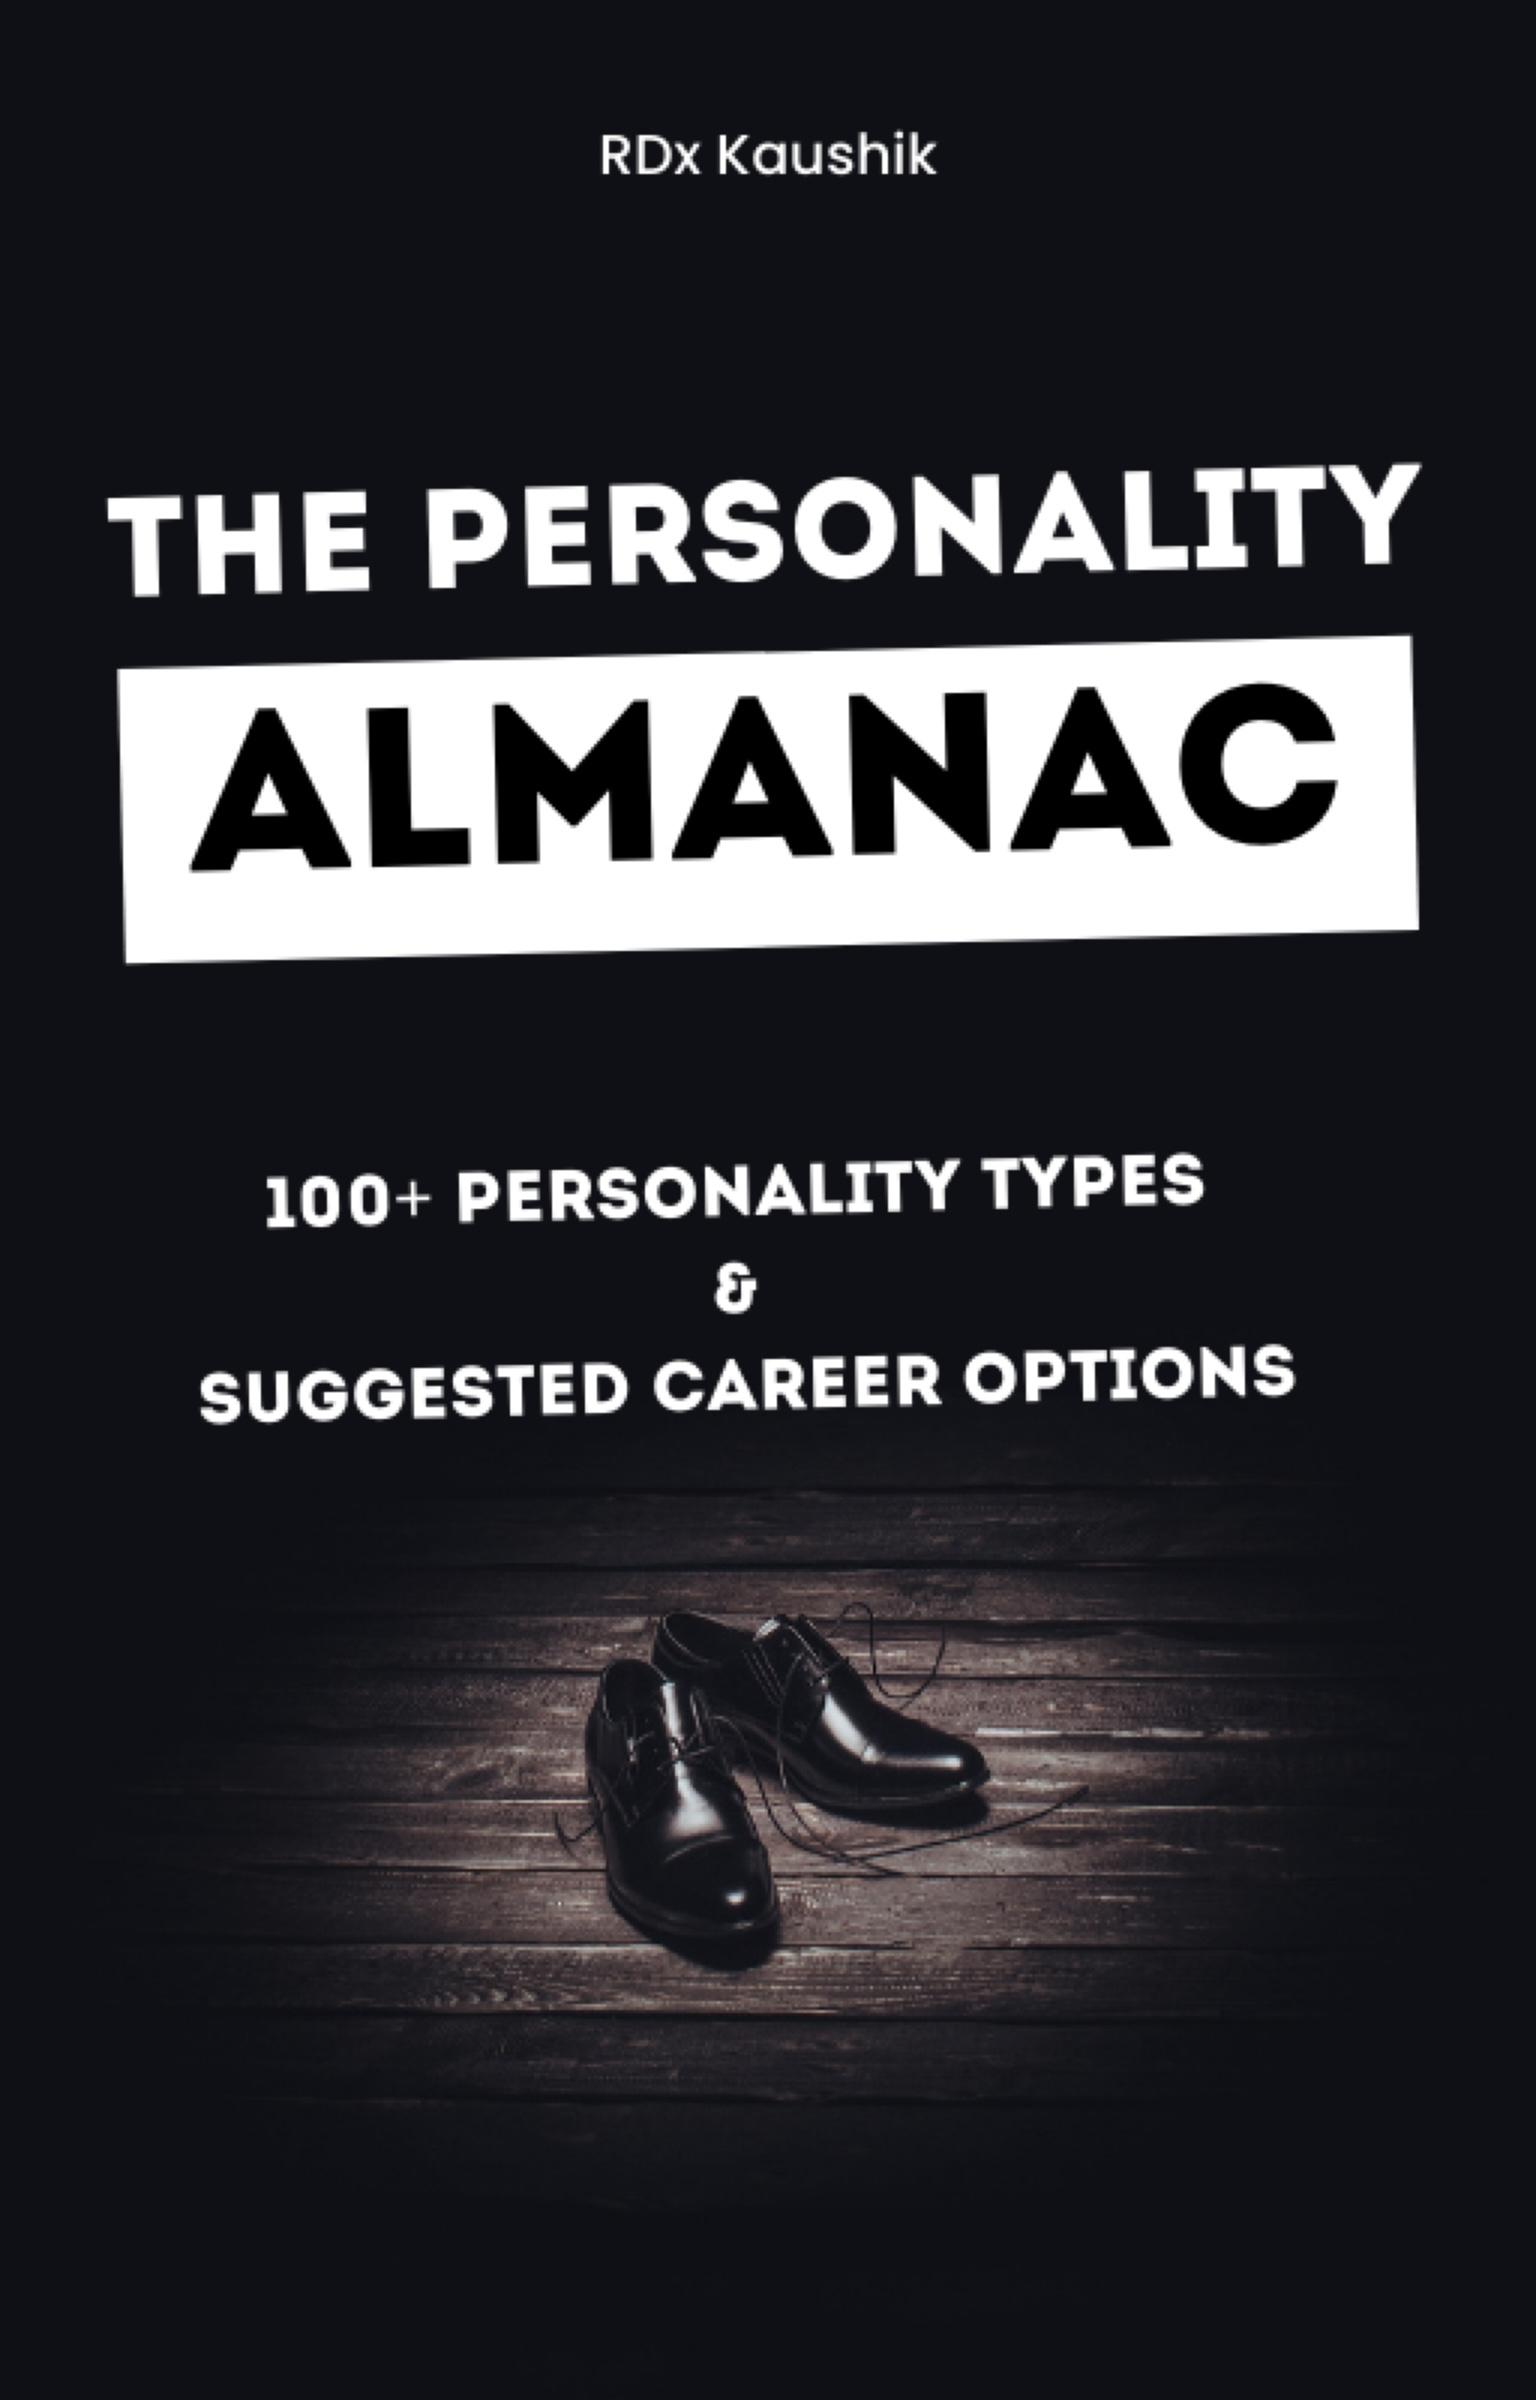 The Personality Almanac